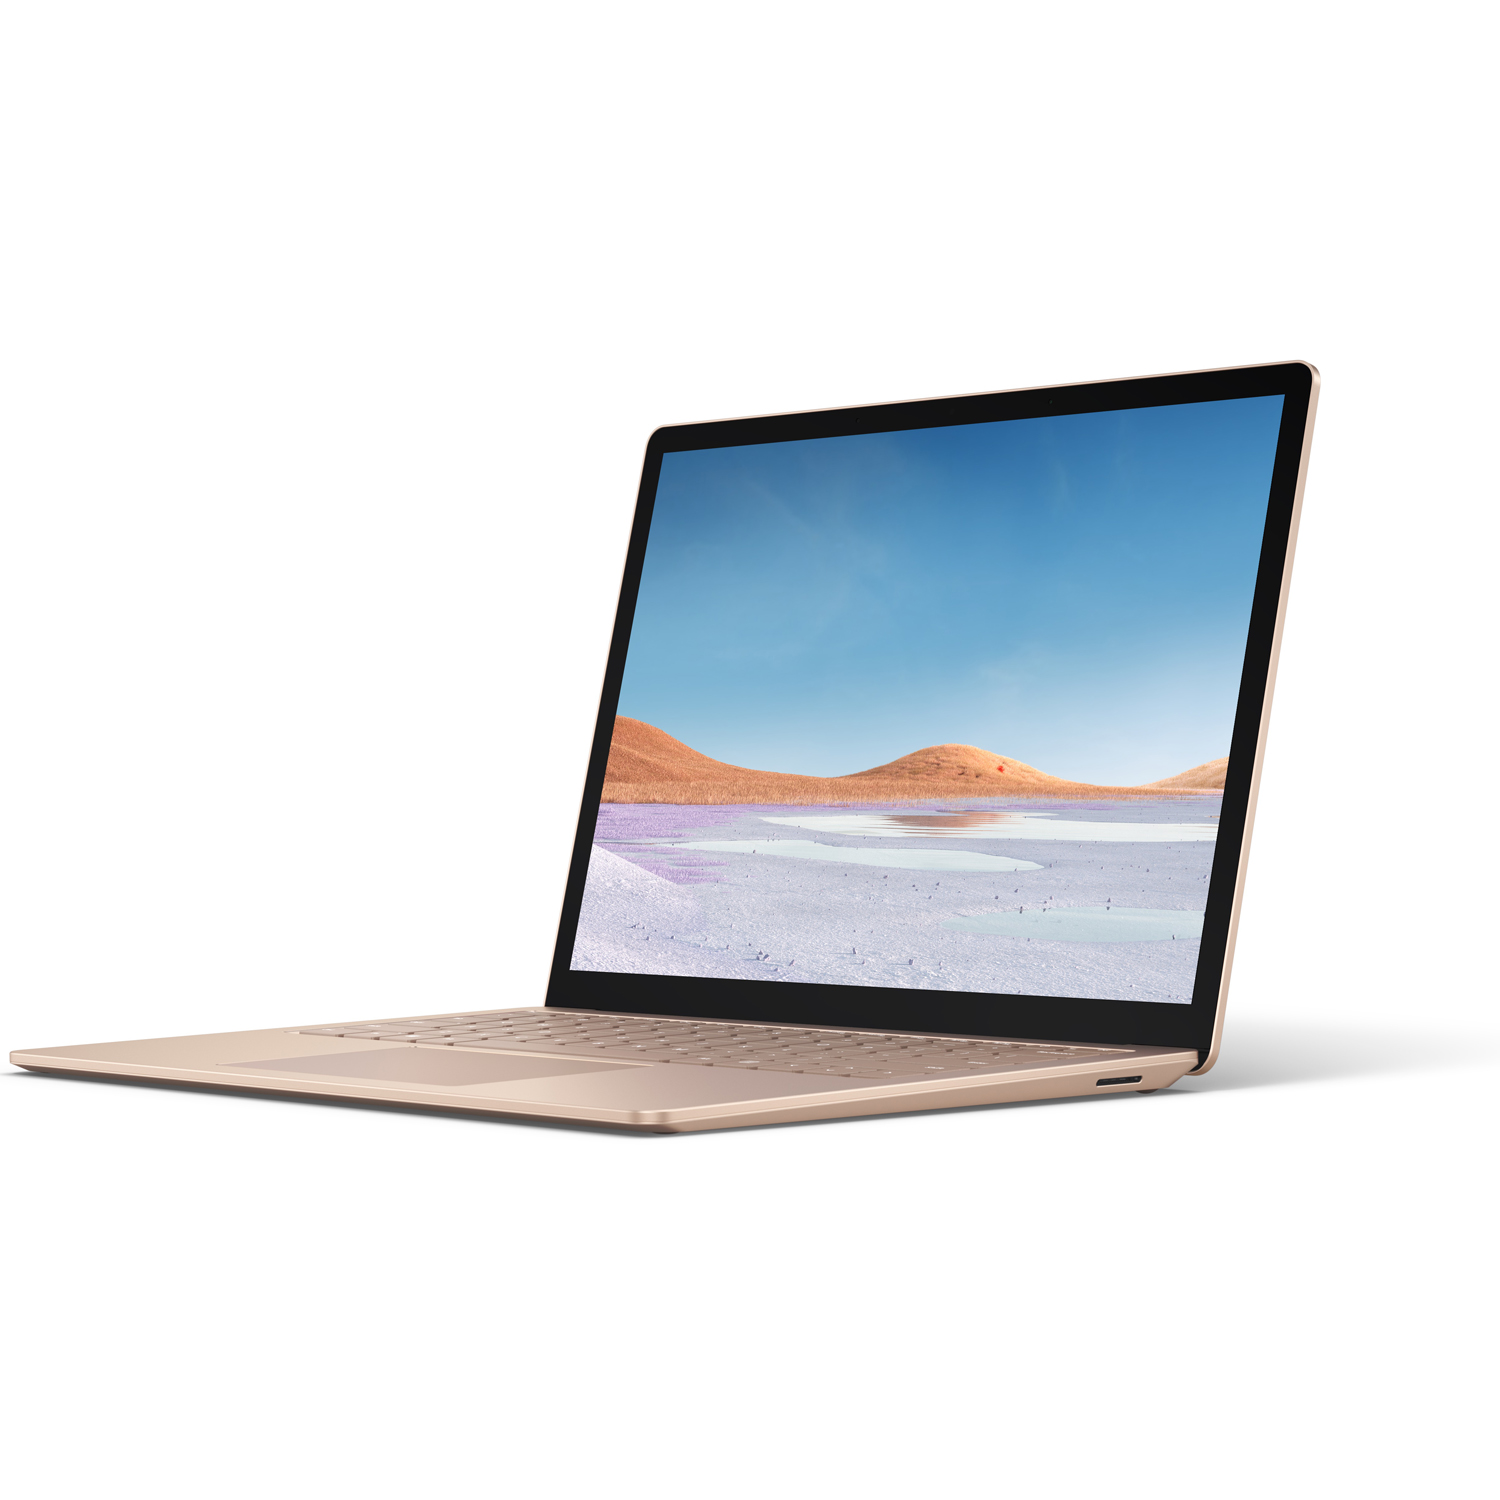 Microsoft V4C-00064 Surface Laptop 3 13.5 Touch Intel i5-1035G7 8GB 256GB, Sandstone